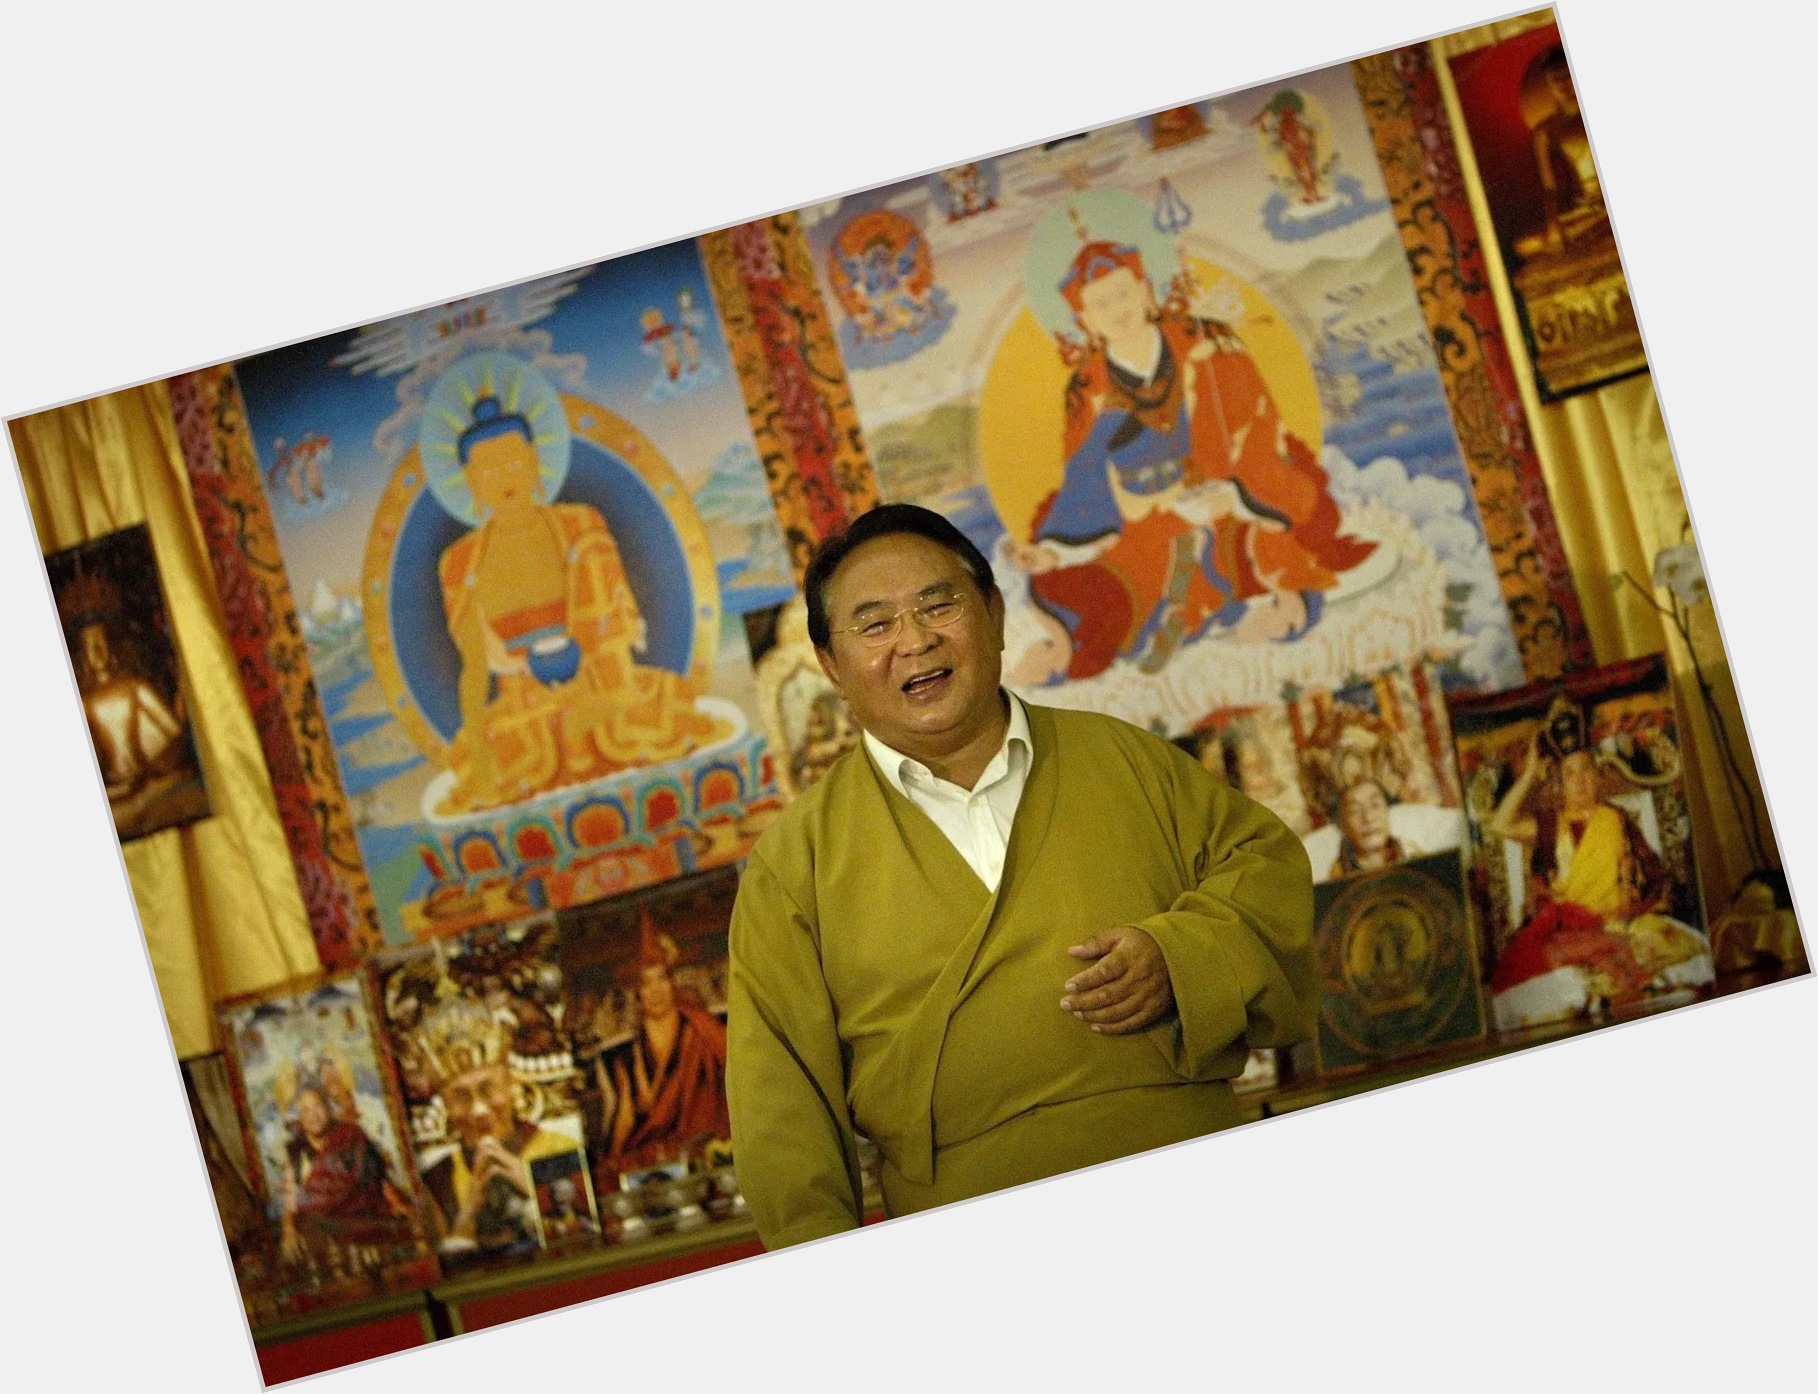 Sogyal Rinpoche dating 2